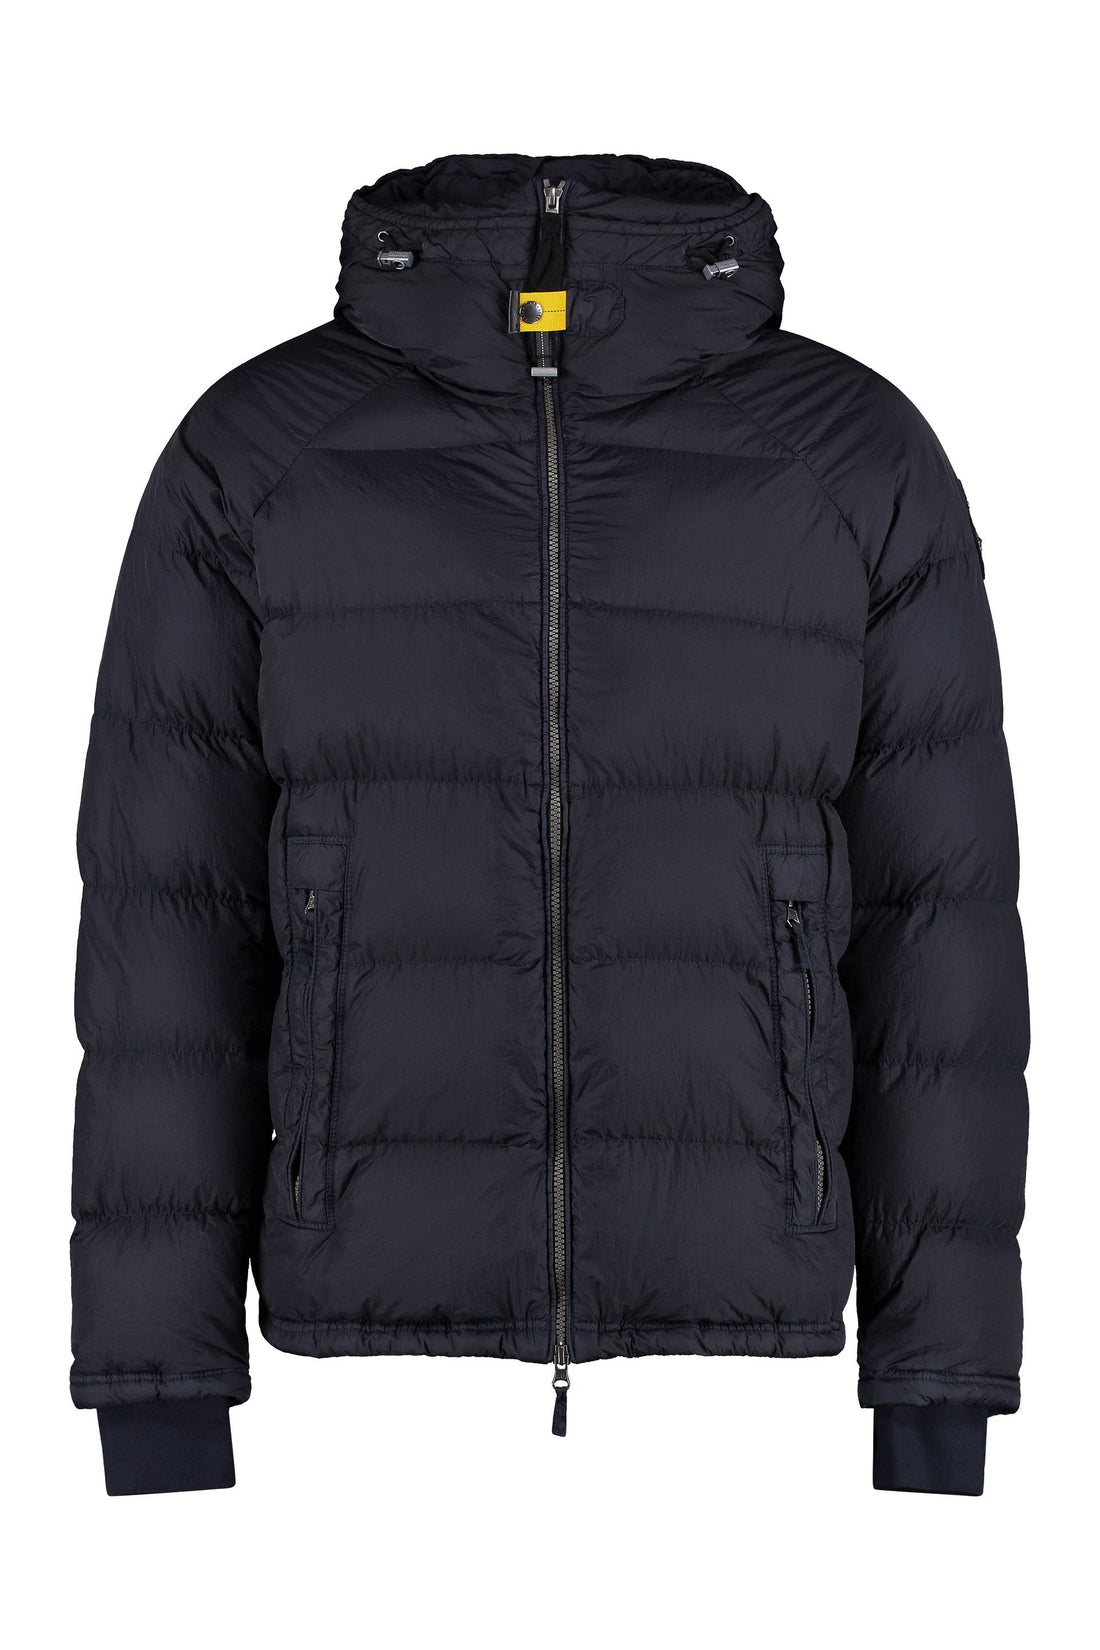 Parajumpers-OUTLET-SALE-Norton hooded short down jacket-ARCHIVIST